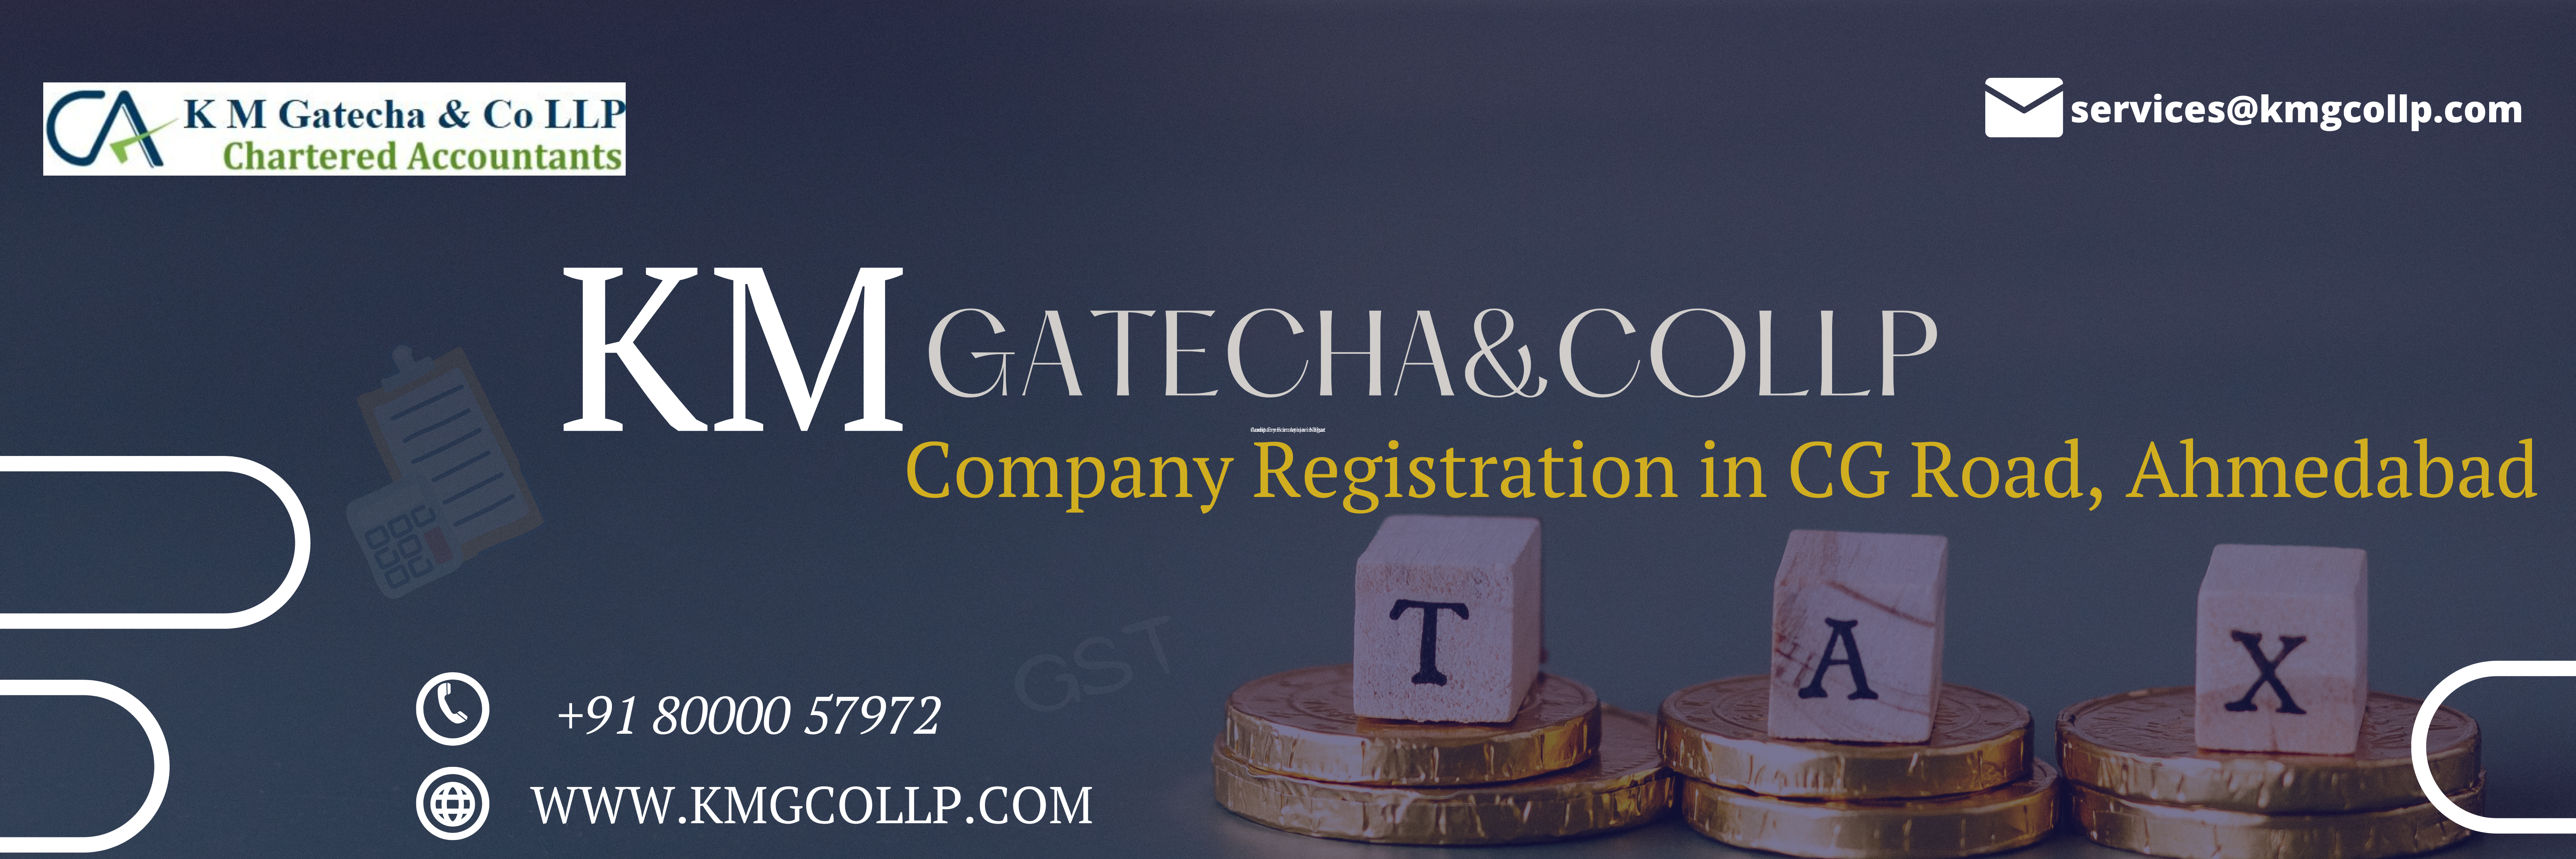 Company Registration in CG Road, Ahmedabad